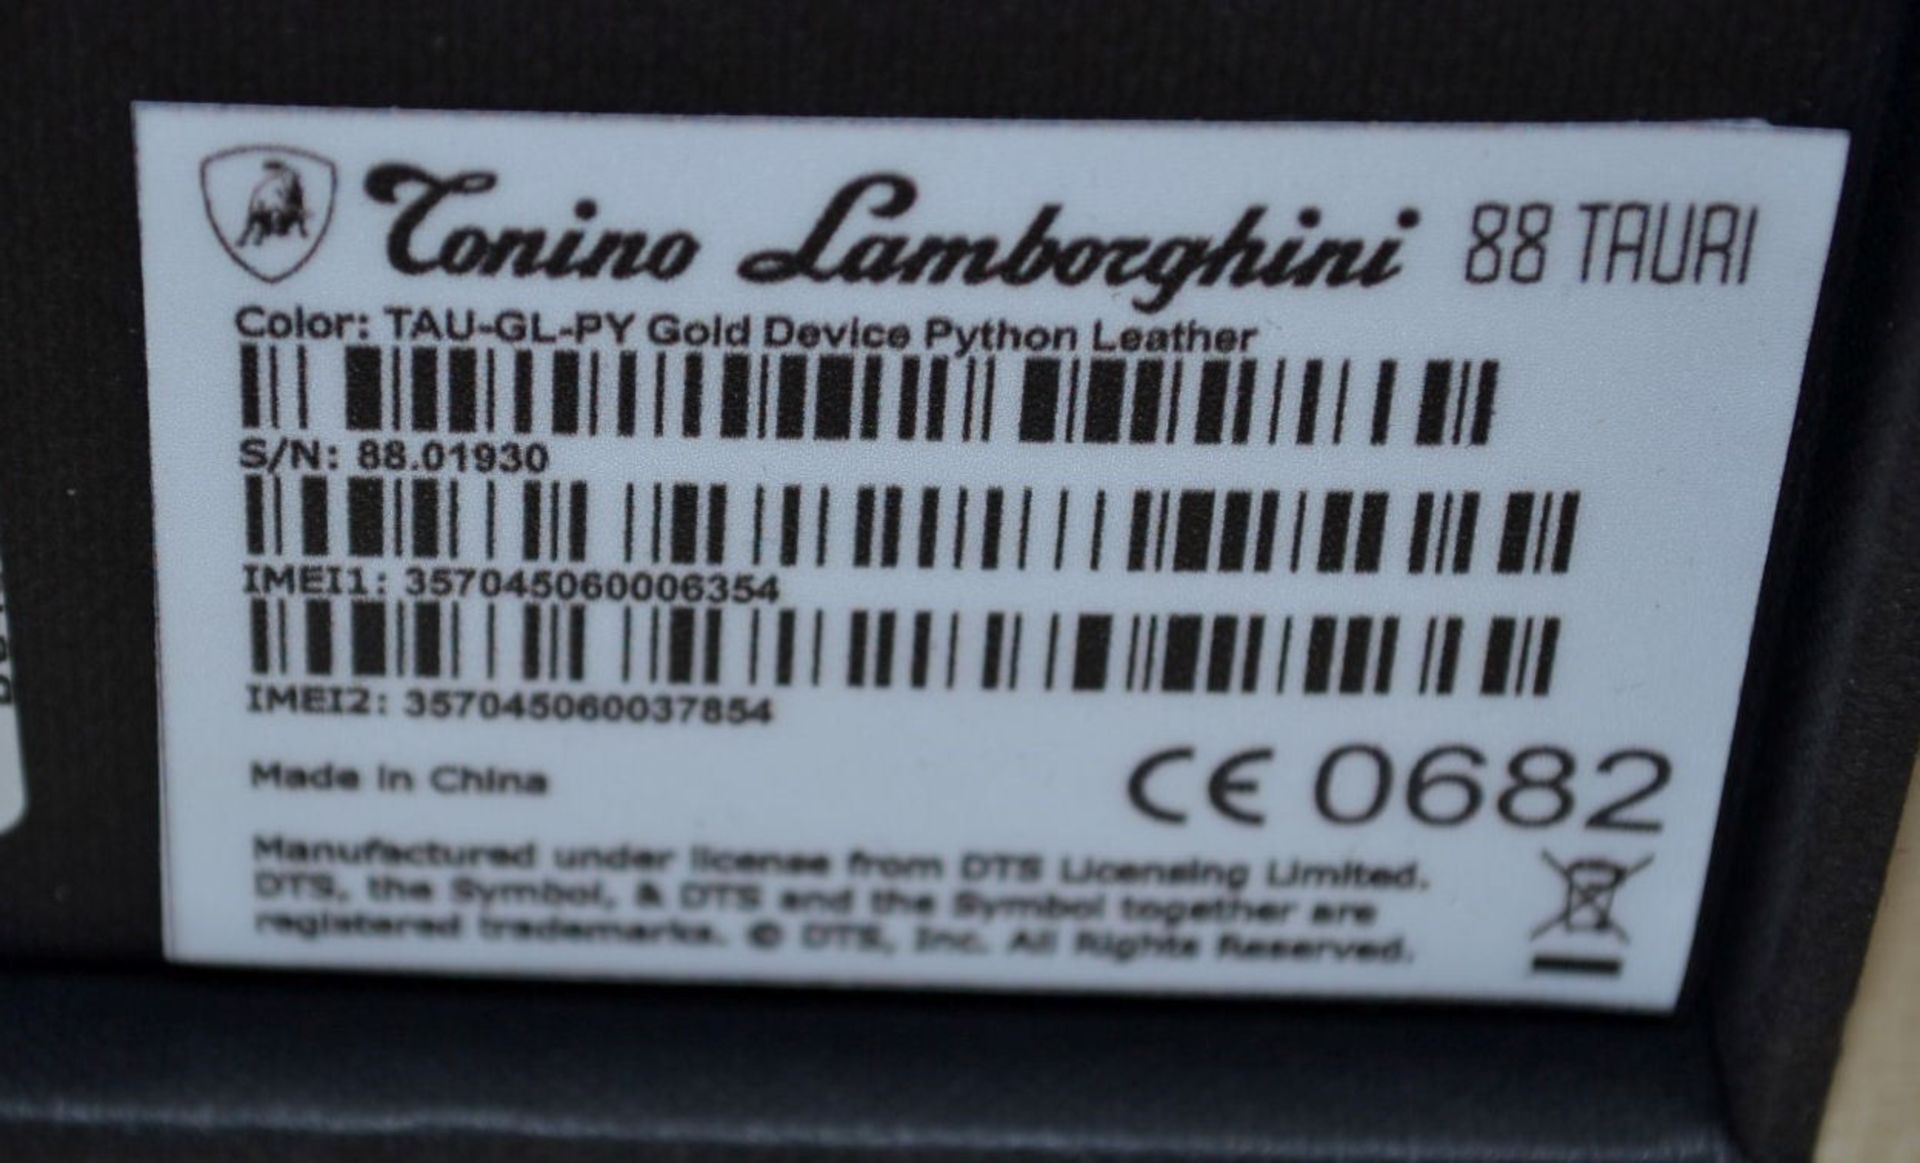 1 x Limited Edition Lamborghini "88 Tauri" Android Smart Phone - Leather Snakeskin-Style Finish - Image 7 of 26